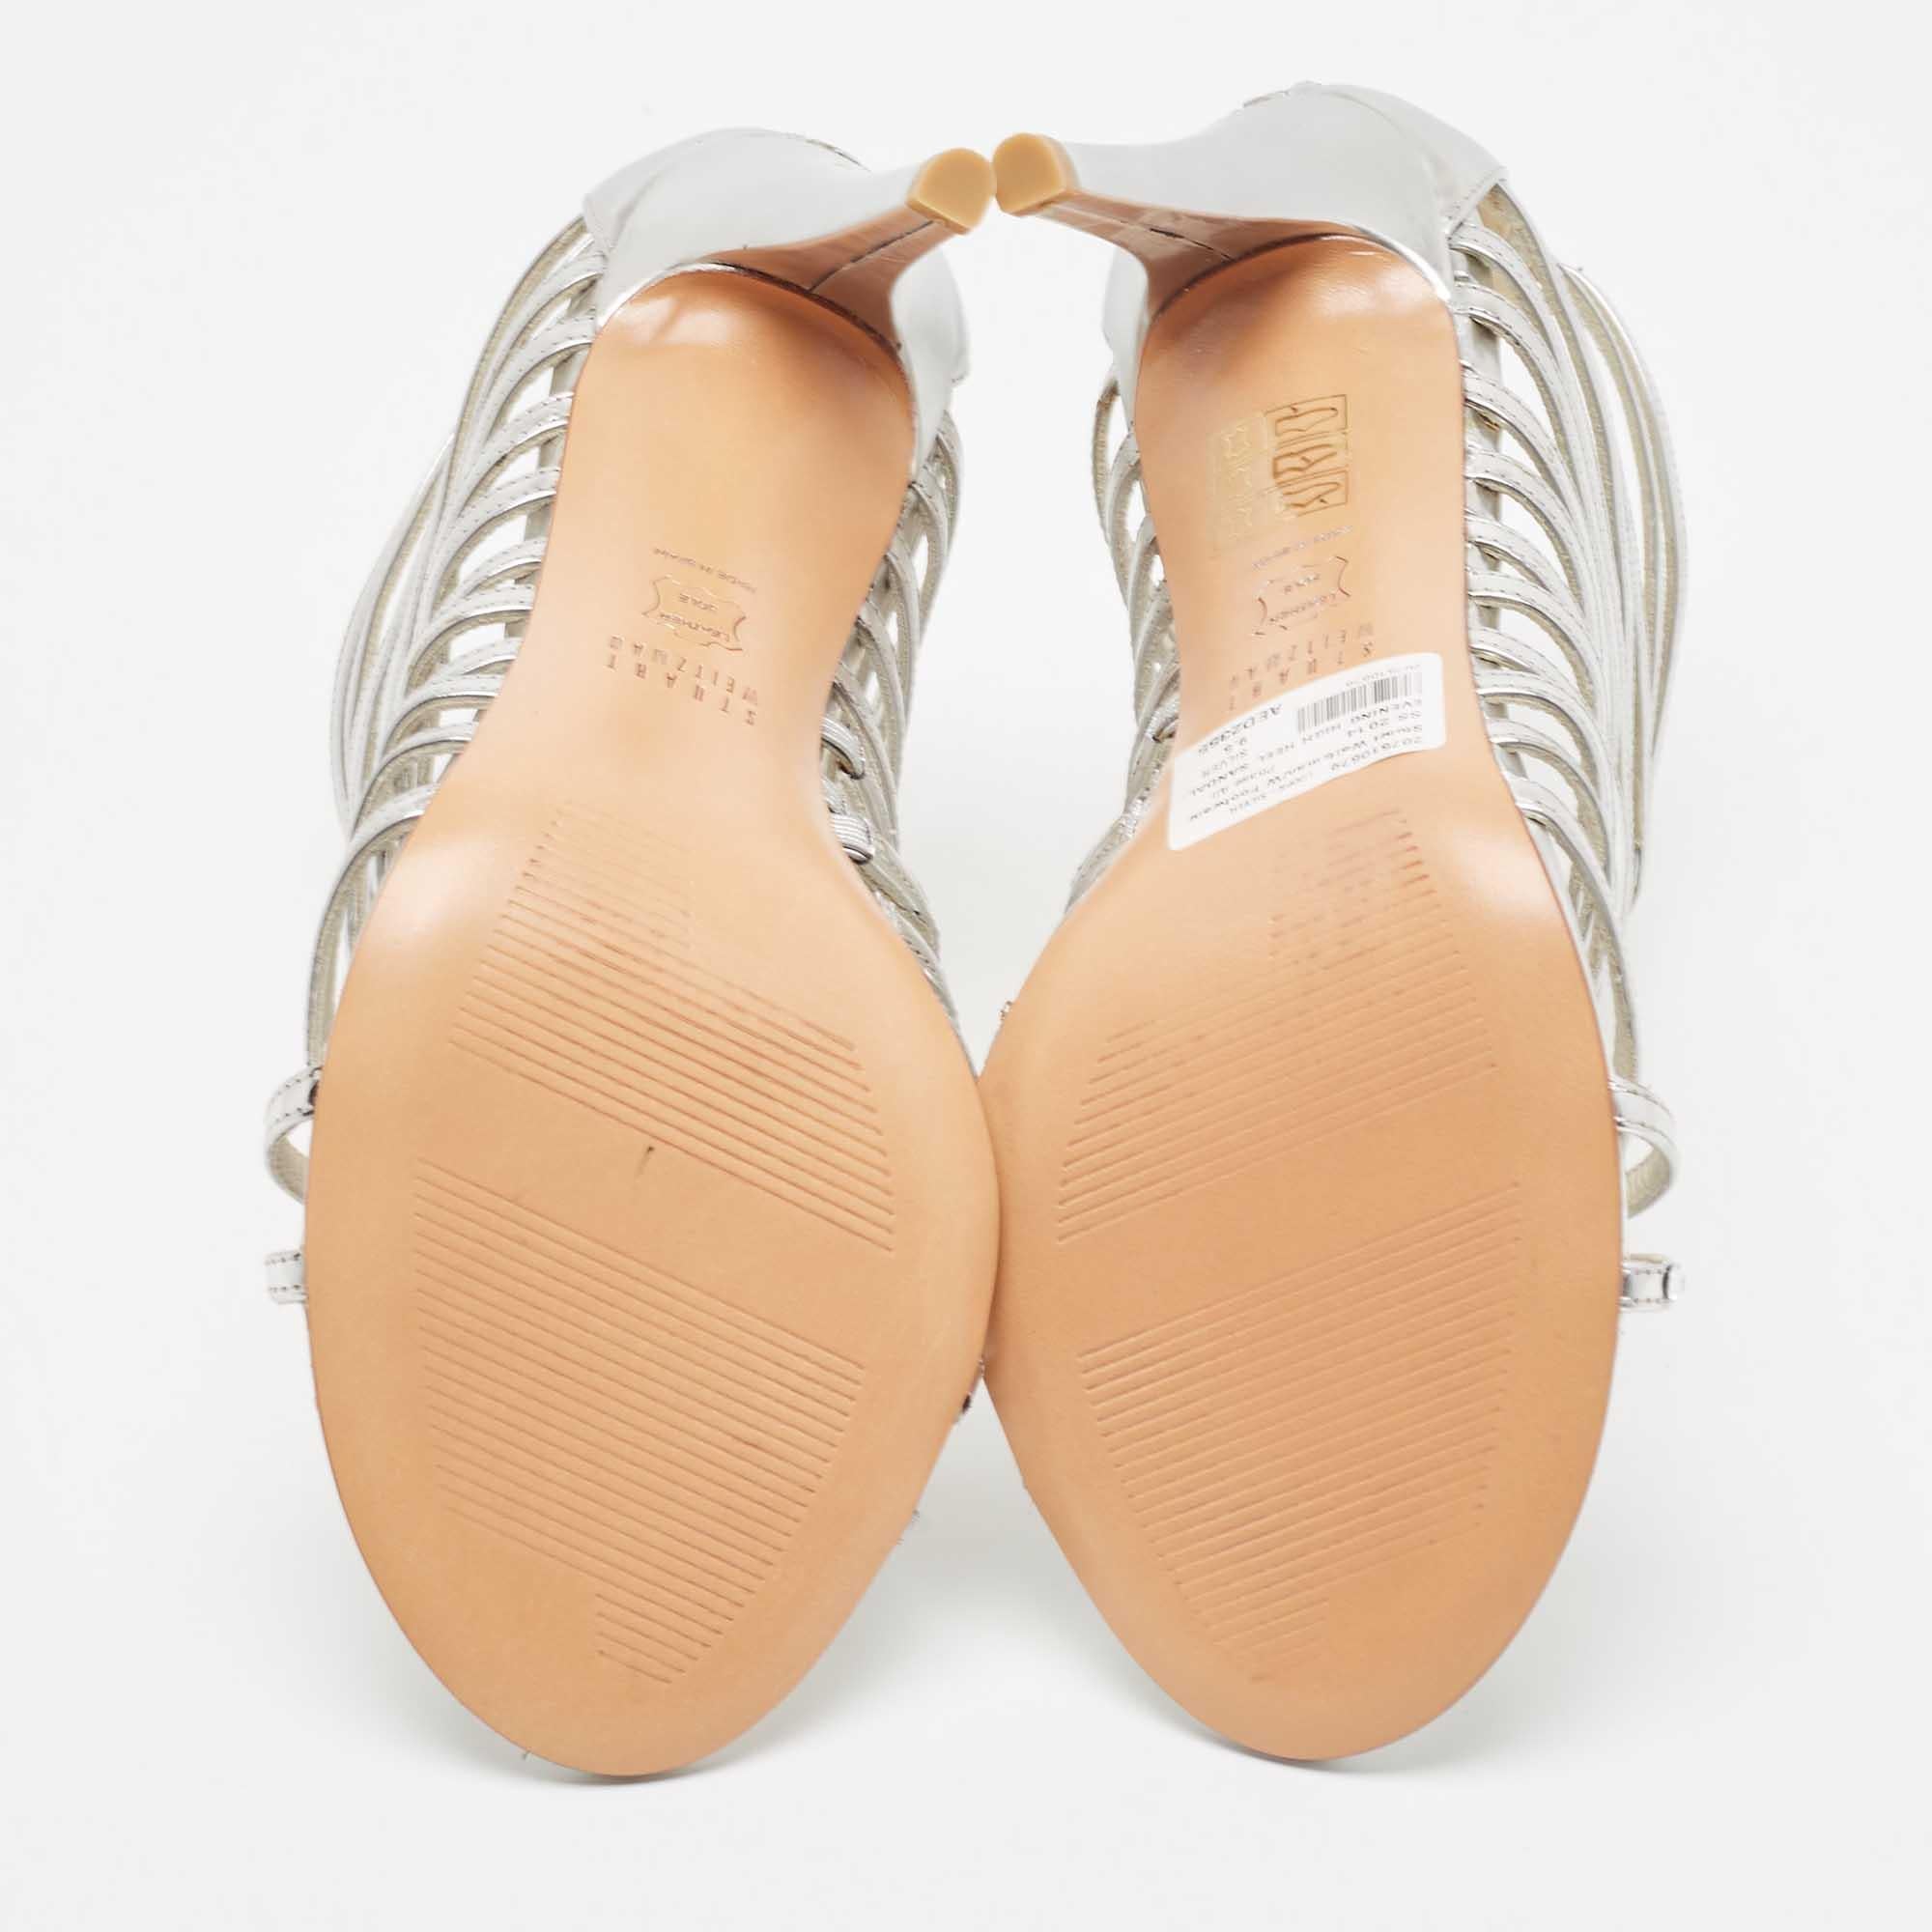 Stuart Weitzman Leather Crystal Embellished Strappy Sandals Size 39.5 1